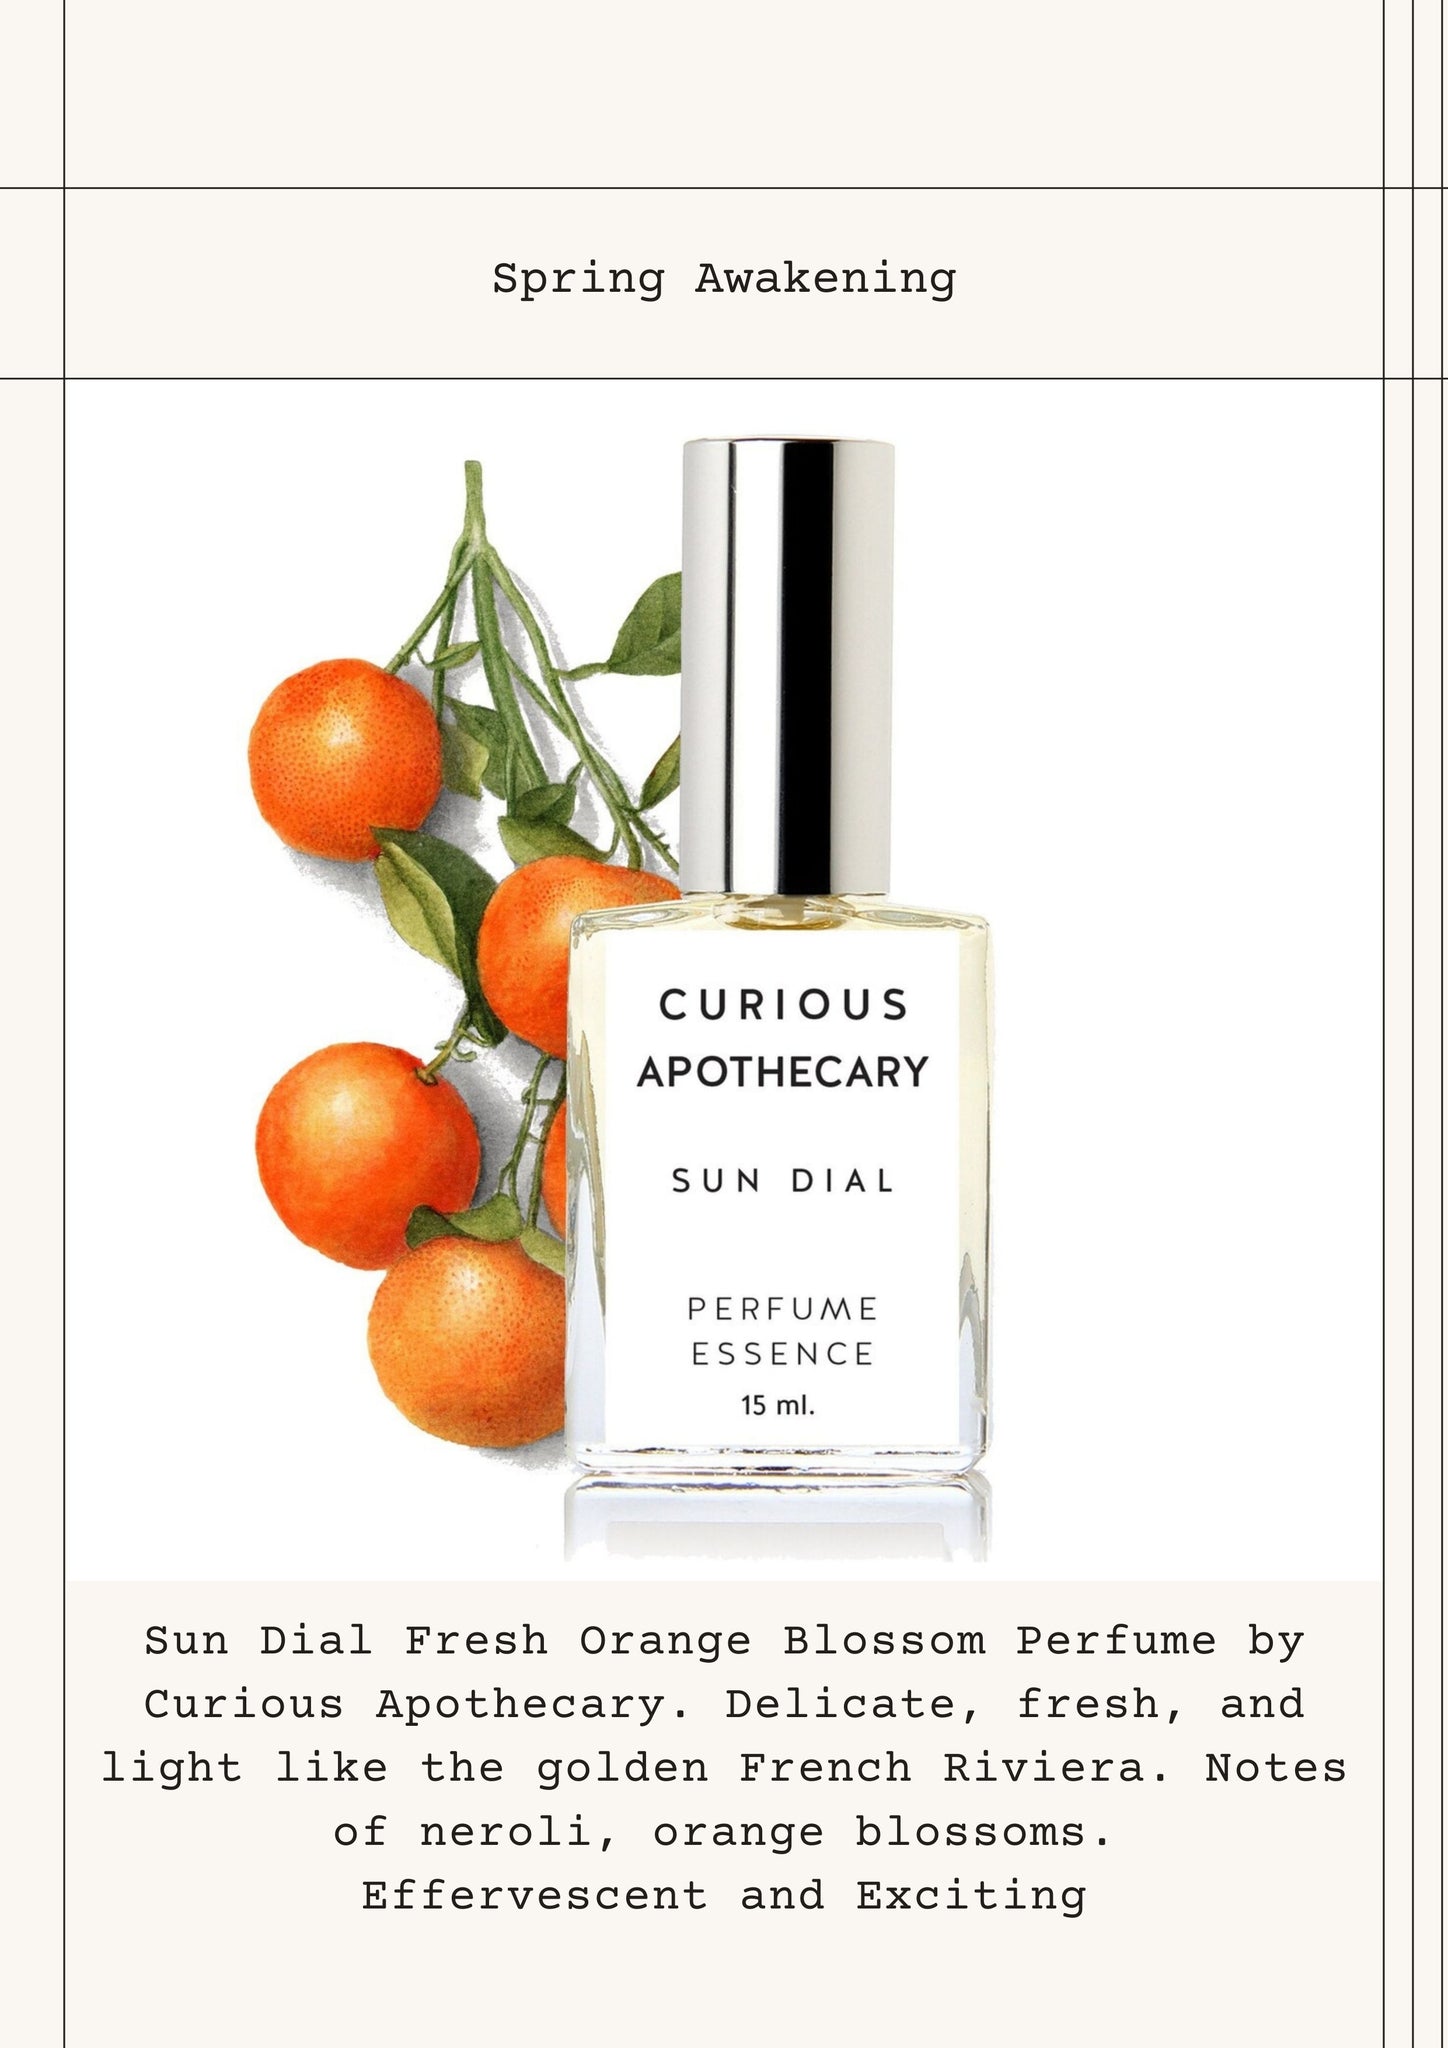 Sun Dial perfume Curious Apothecary